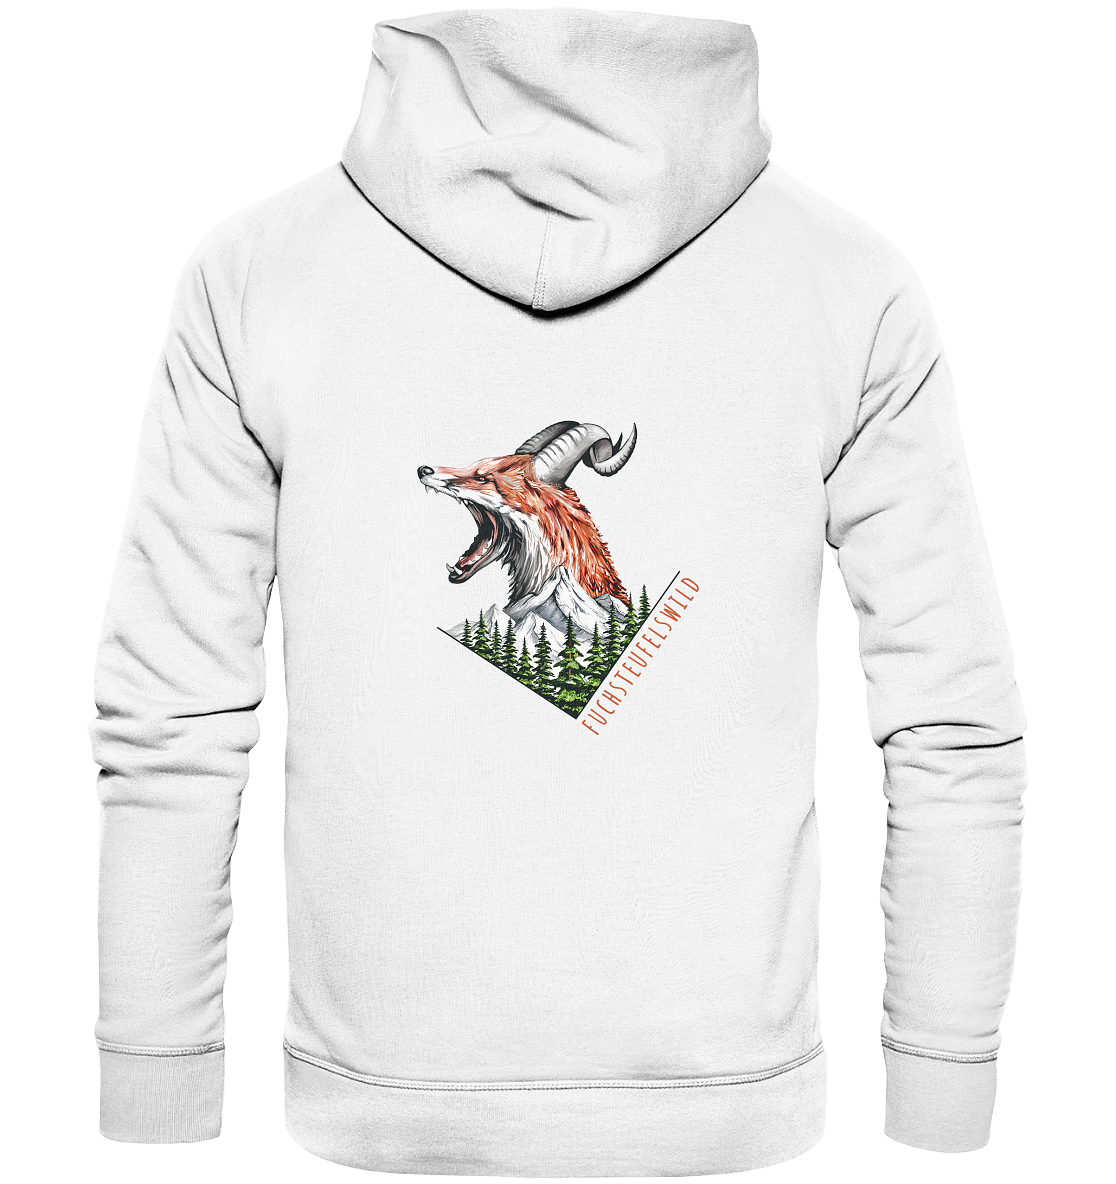 back-organic-fashion-hoodie-f8f8f8-1116x-1.png